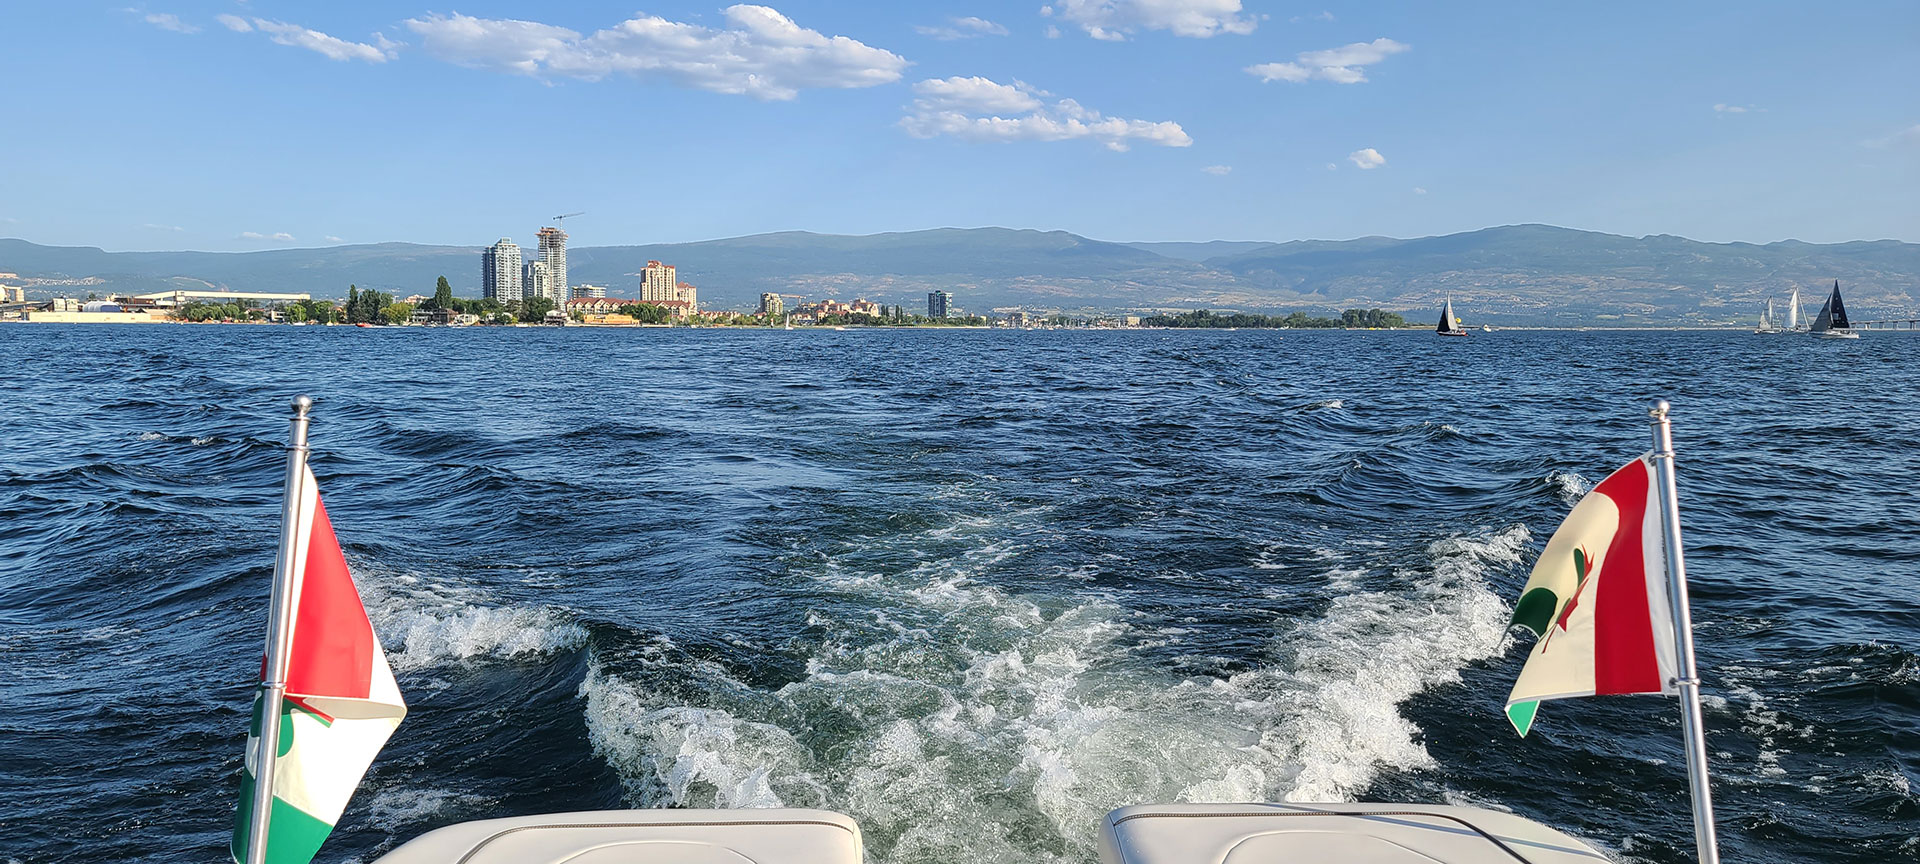 Join Kelowna Water Taxi & Cruises for wonderful adventures on Lake Okanagan